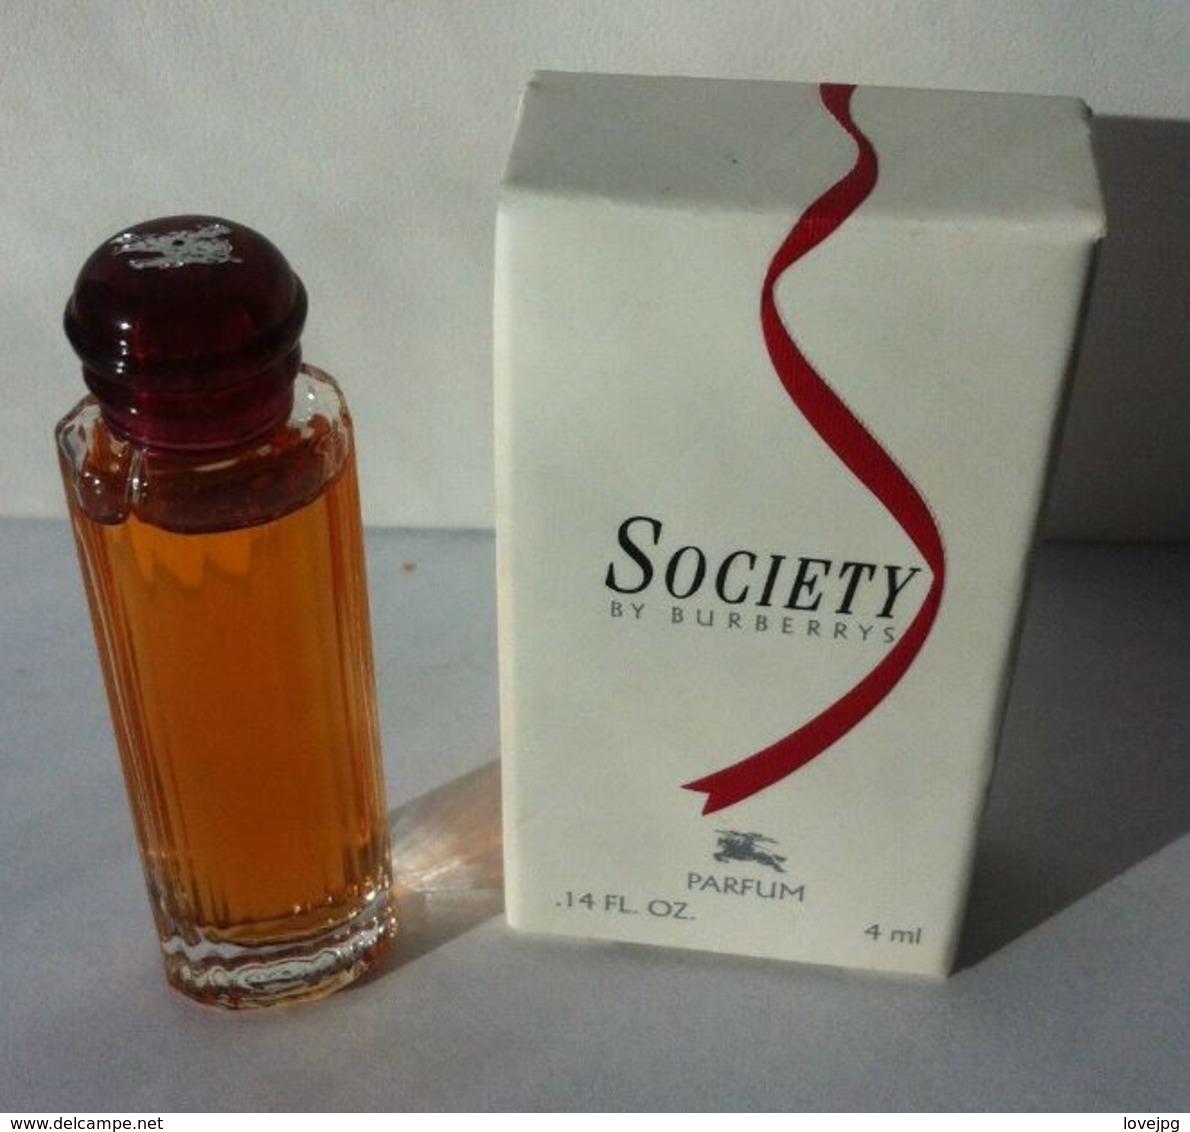 Society By Burberry Miniature Parfum 4ml - Miniatures Femmes (avec Boite)